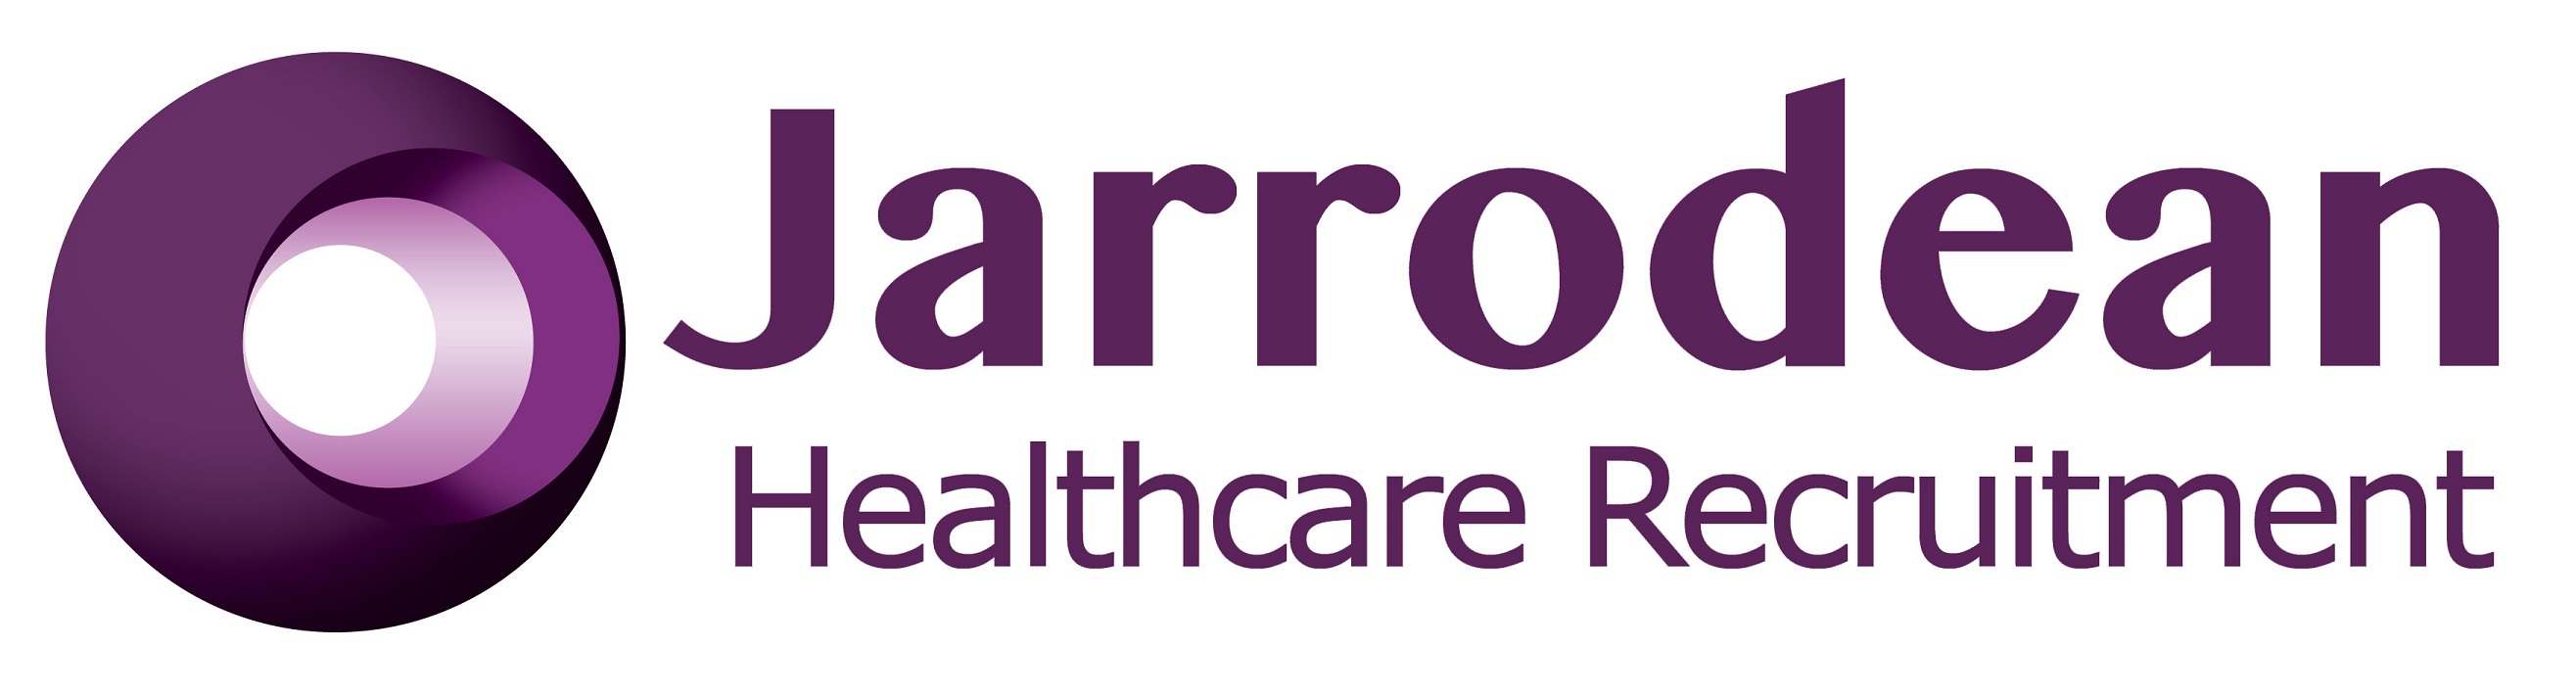 Jarrodean Healthcare Recruitment 